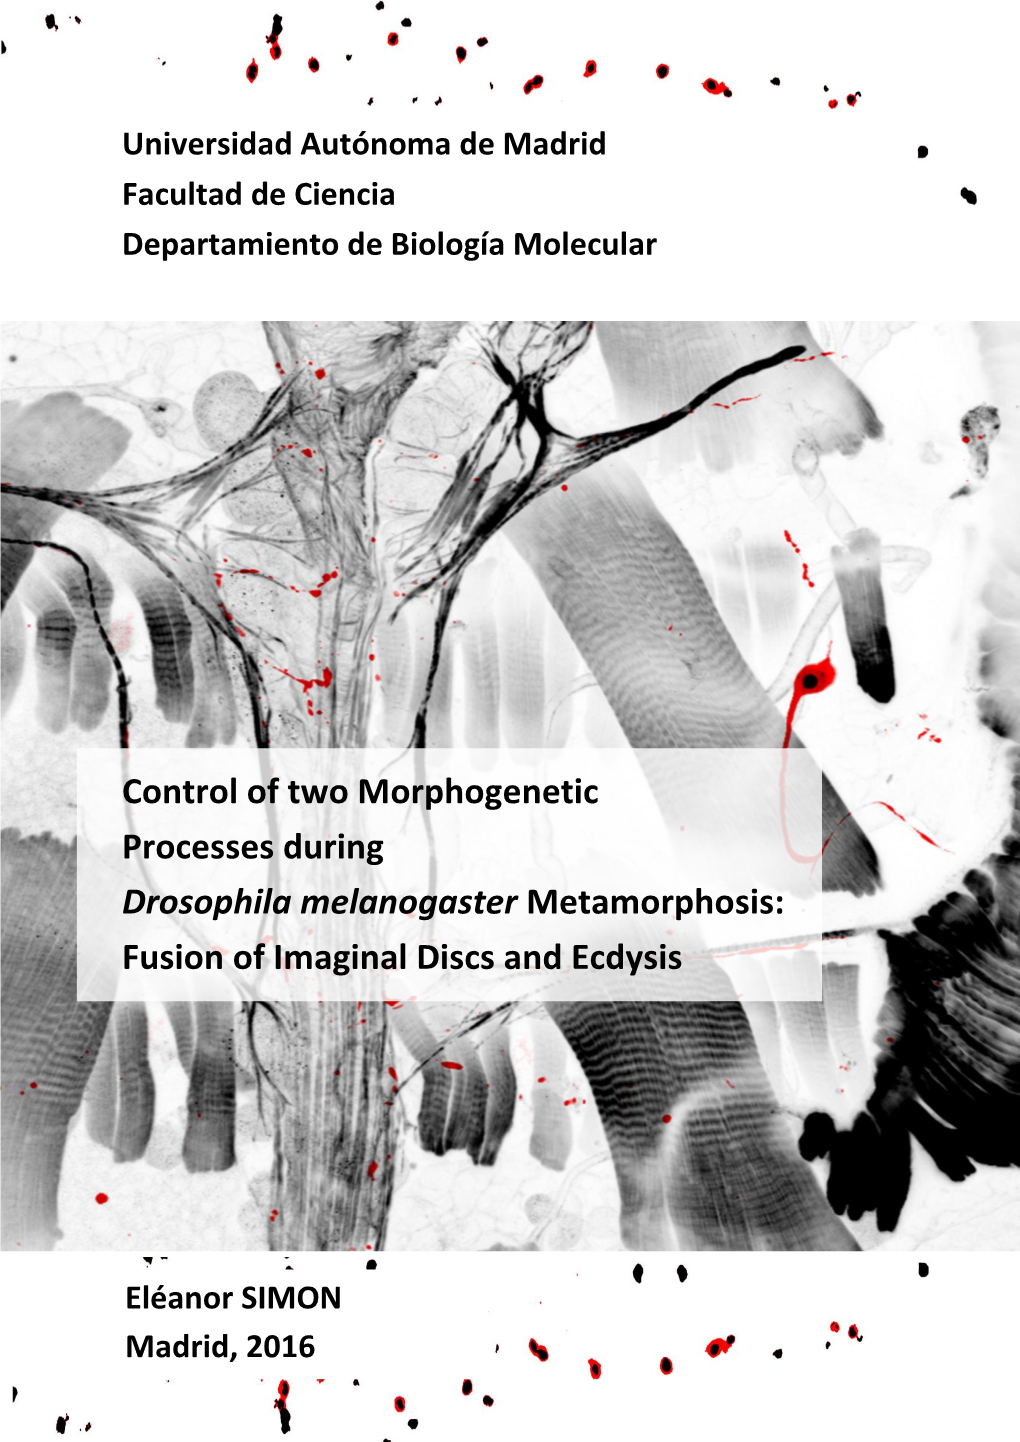 Control of Two Morphogenetic Processes During Drosophila Melanogaster Metamorphosis: Fusion of Imaginal Discs and Ecdysis